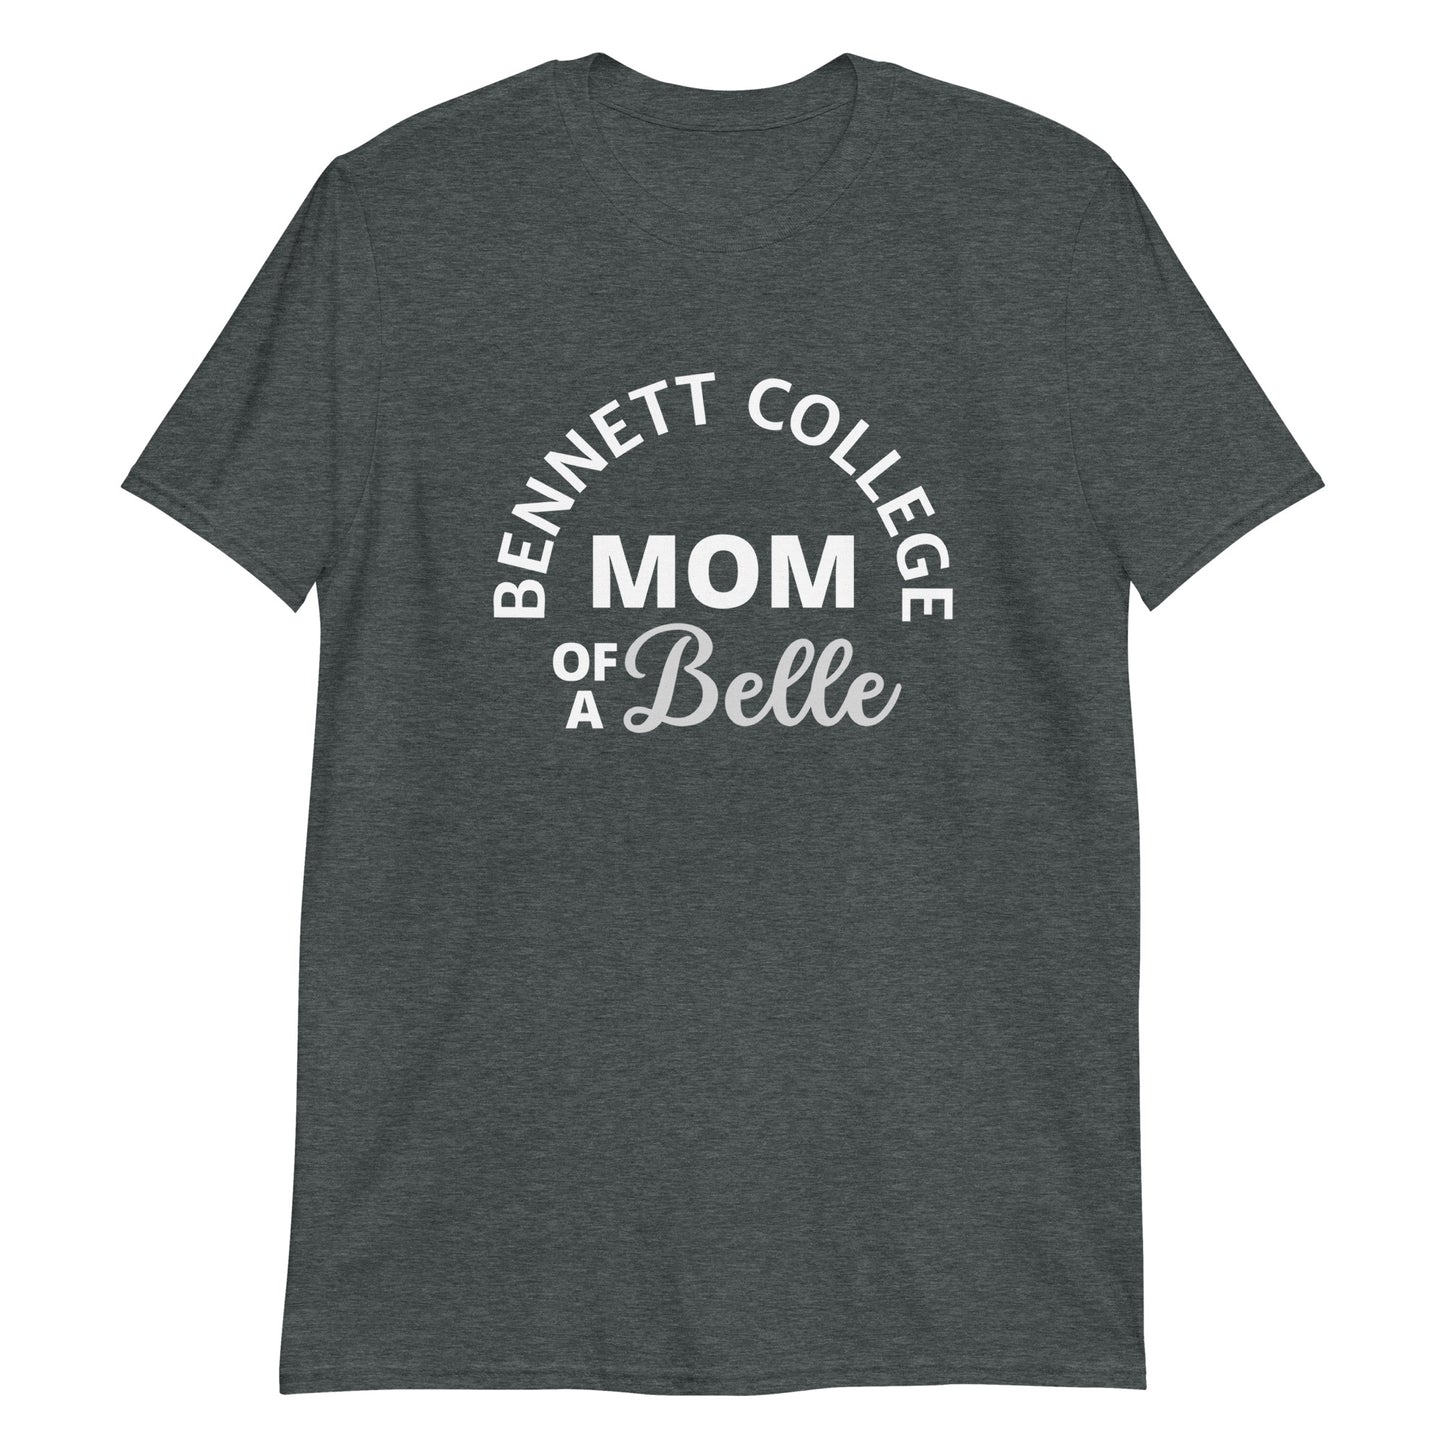 Mom Of A Belle - Short-Sleeve Unisex T-Shirt